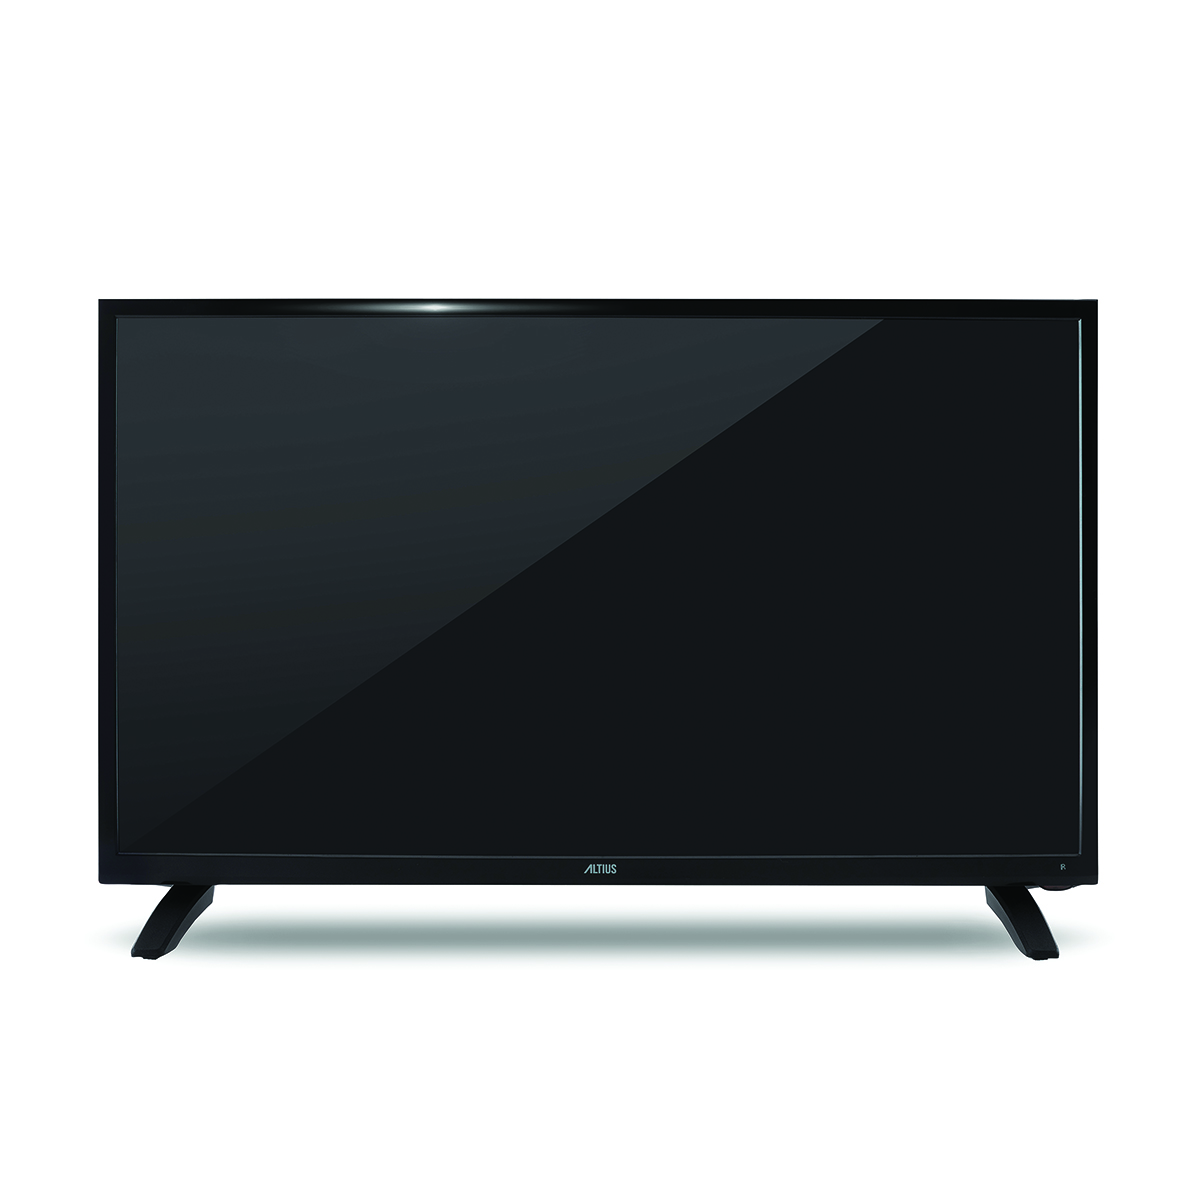 Altius Smart TV 24 Inch 240/12V